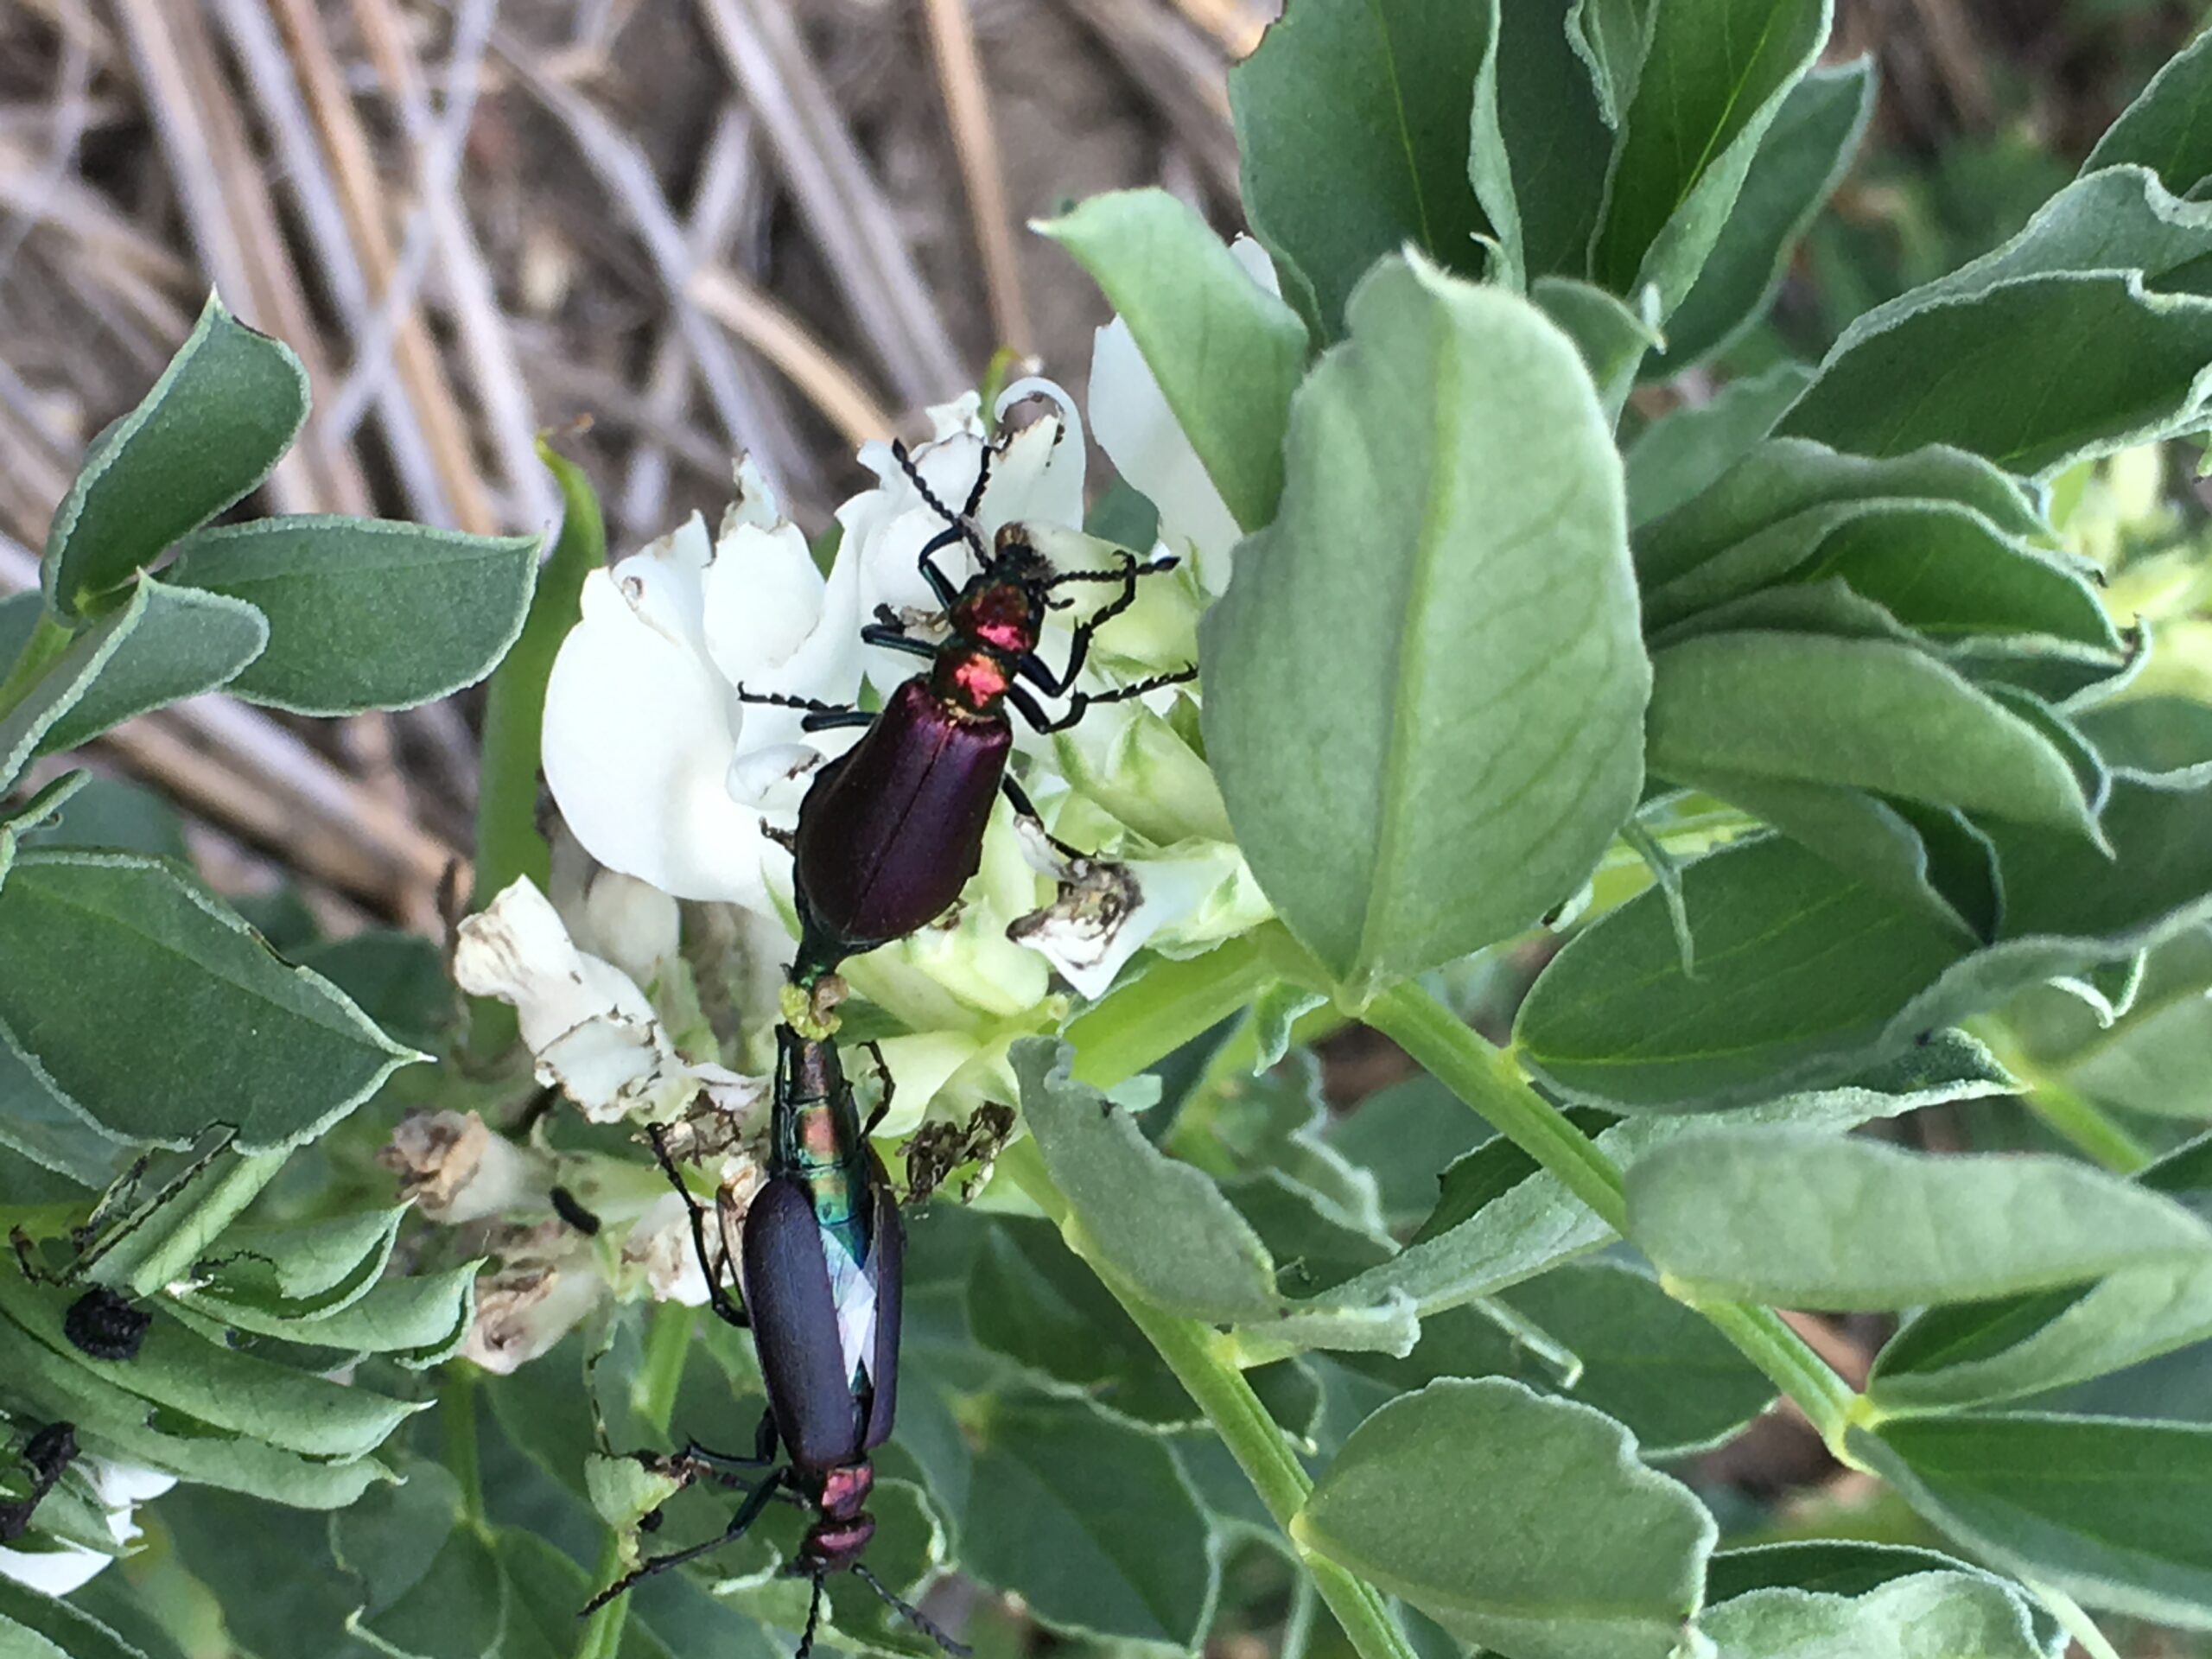 blister beetles in faba